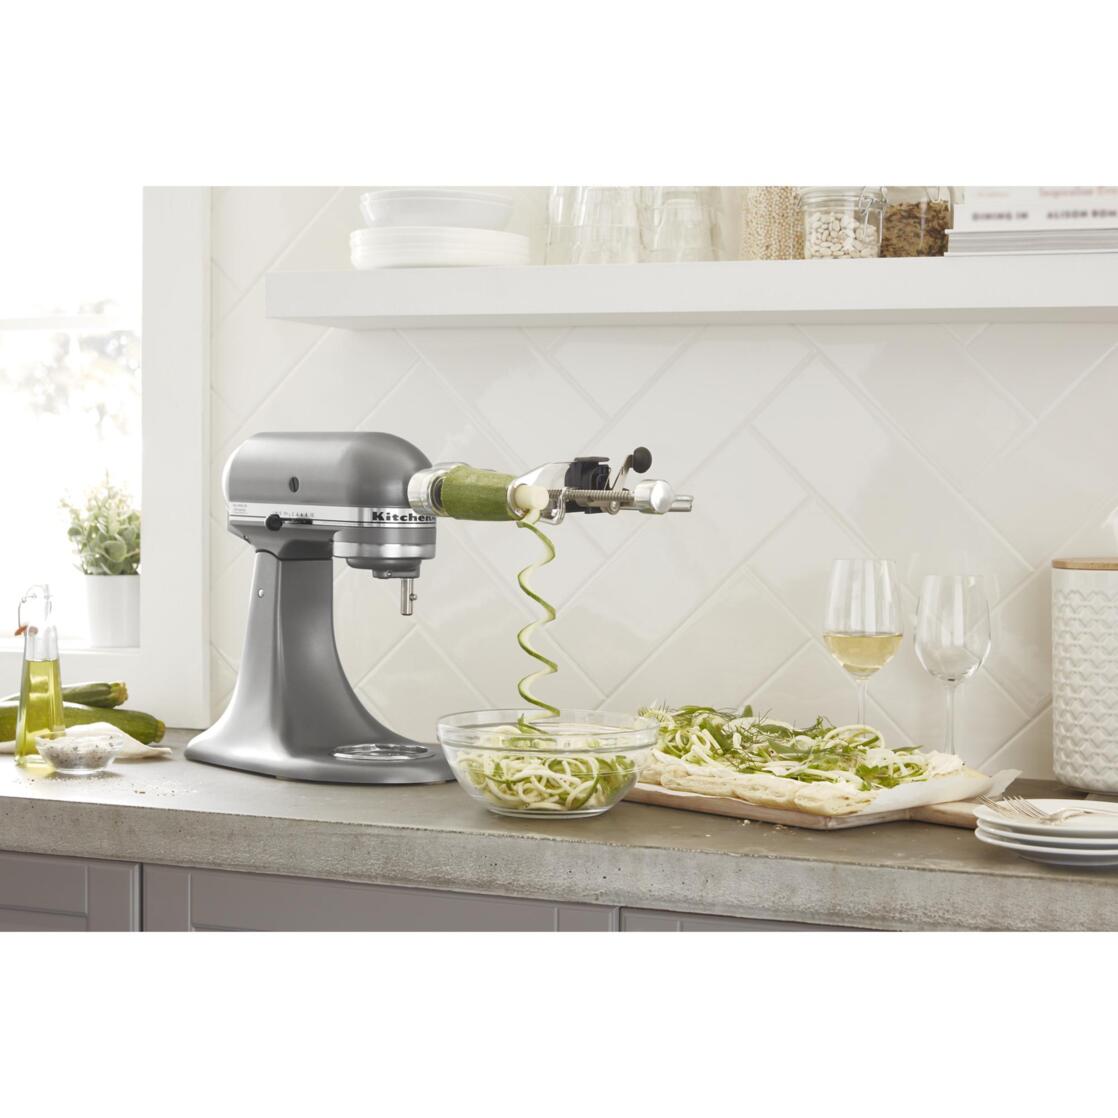 KitchenAid® Deluxe 4.5 Quart Tilt-Head Stand Mixer, Silver, KSM97 - image 3 of 8